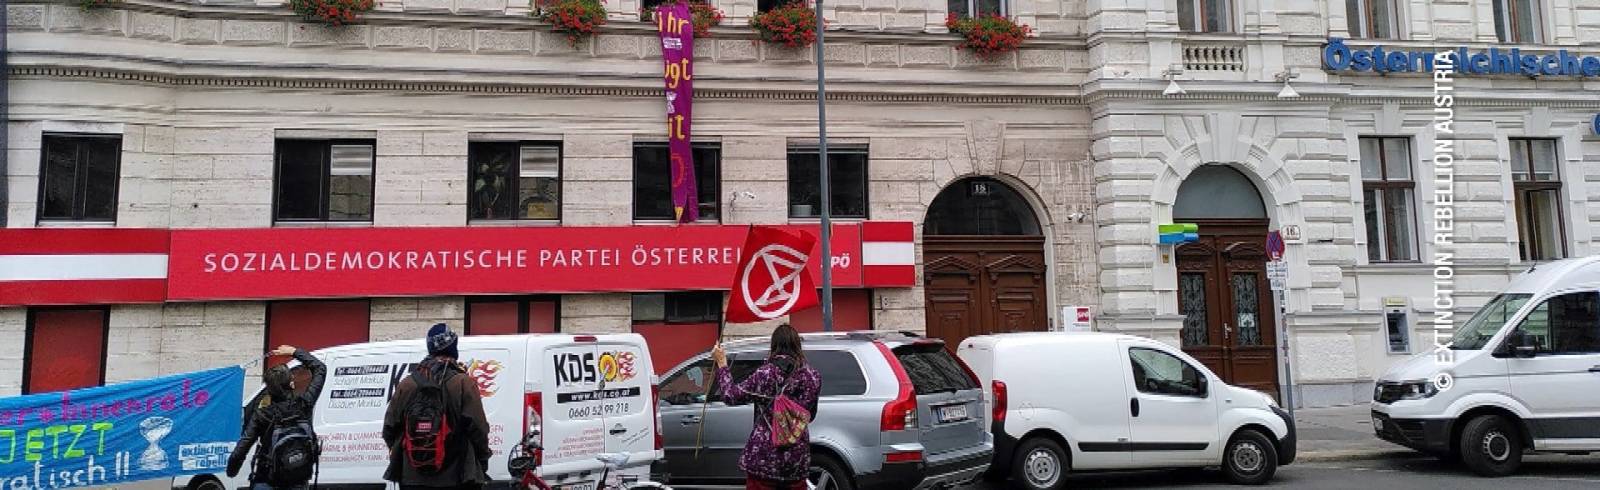 Bezirksflash: Klimaprotest bei SPÖ Zentrale